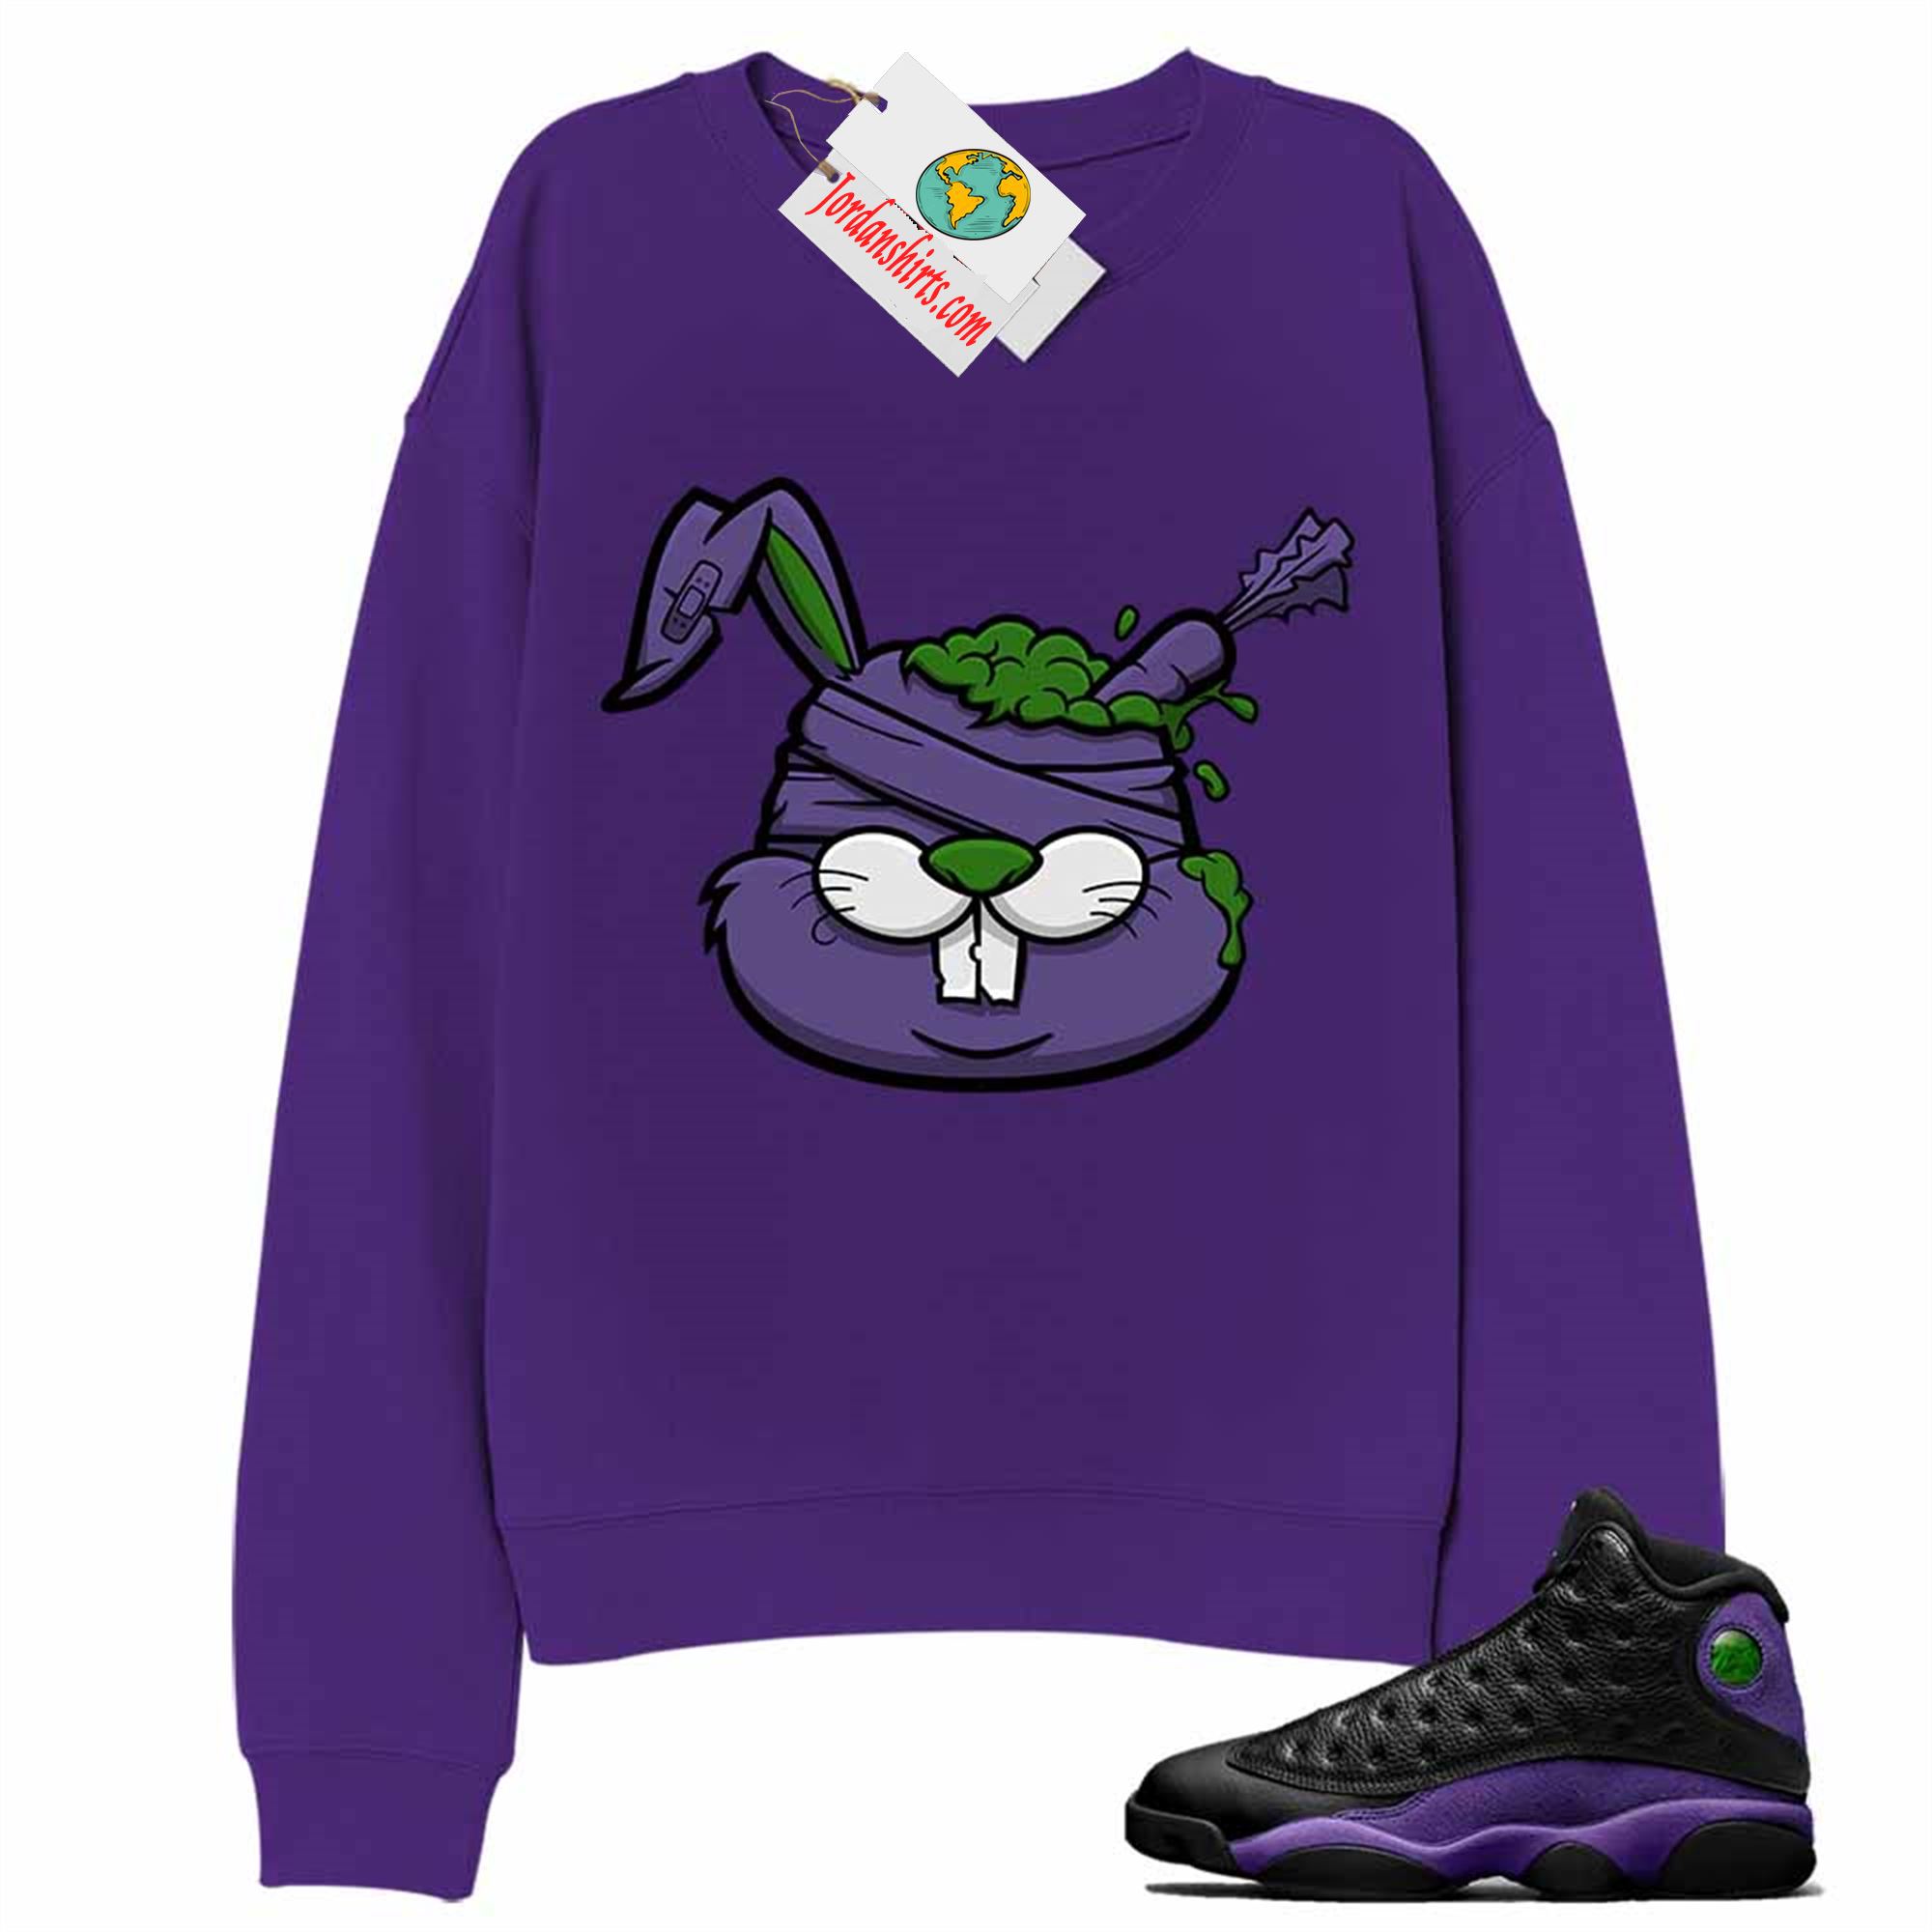 Jordan 13 Sweatshirt, Zombie Bunny Purple Sweatshirt Air Jordan 13 Court Purple 13s Full Size Up To 5xl